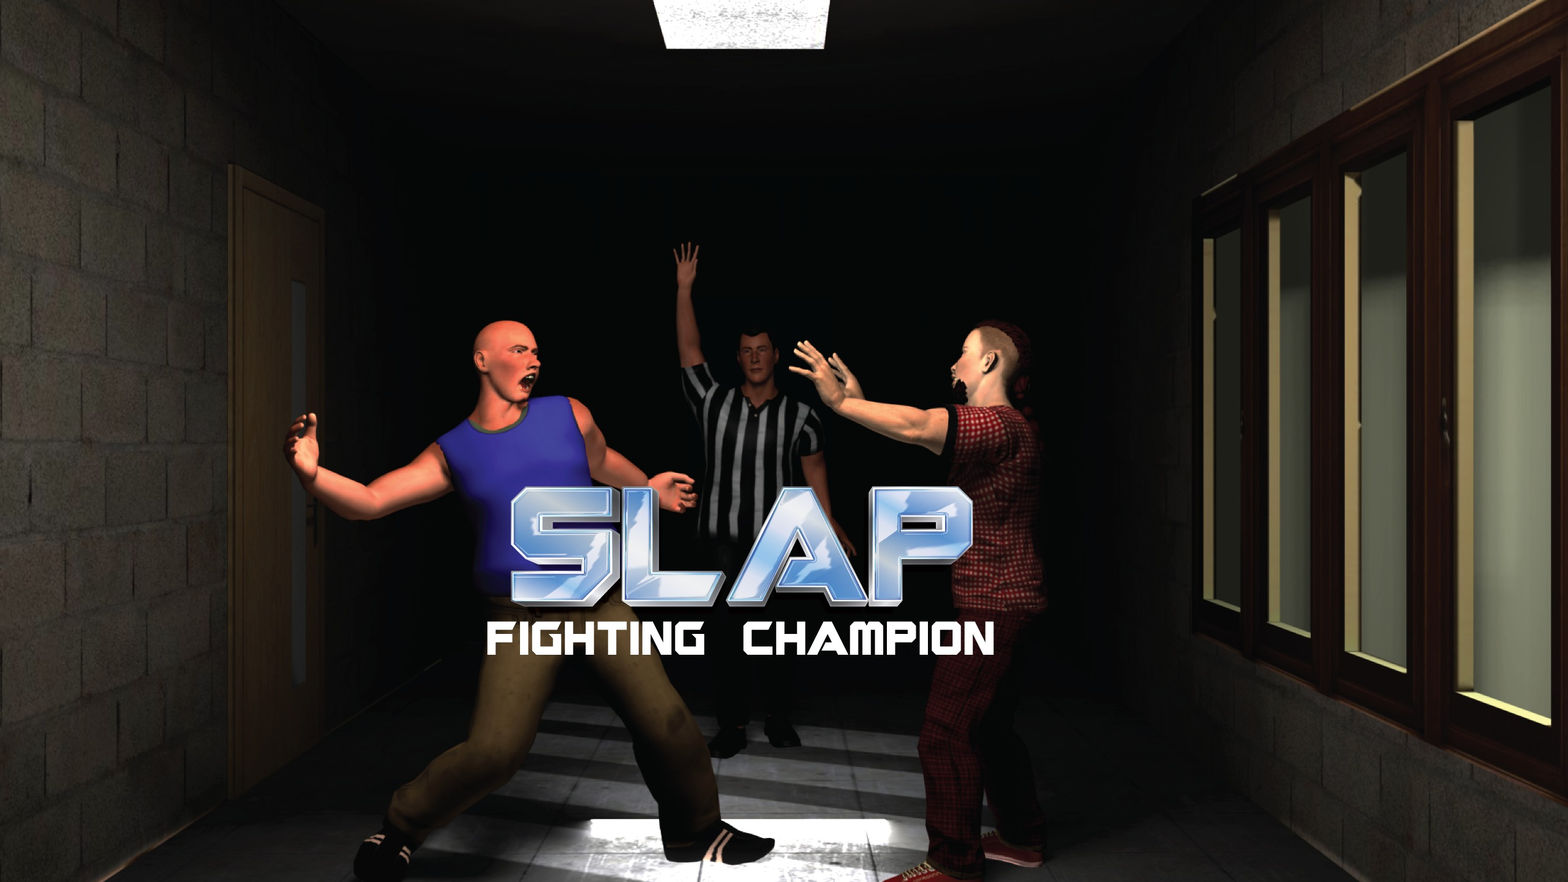 Slap Fighting Champion